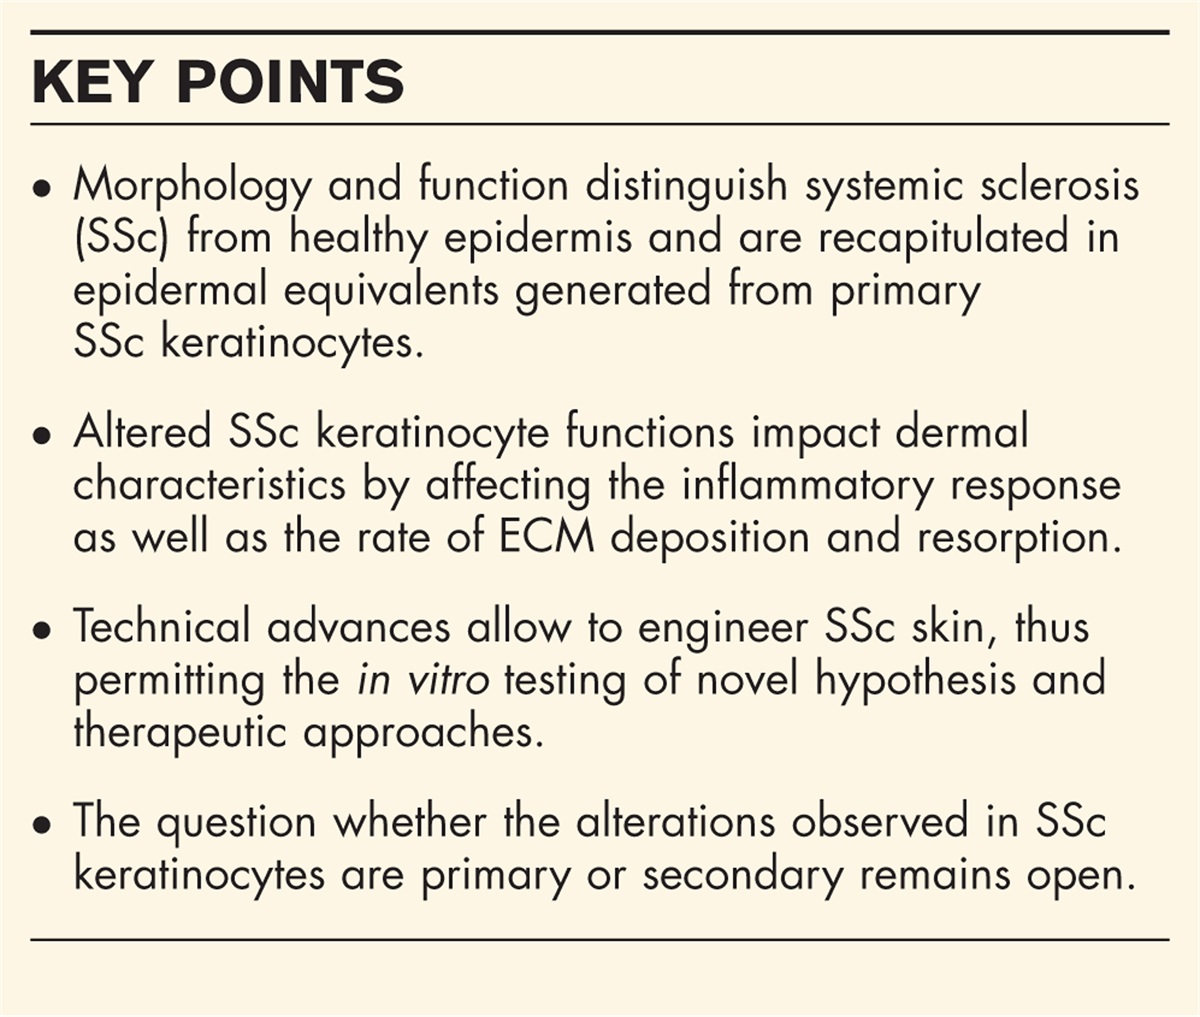 Contribution of keratinocytes to dermal fibrosis